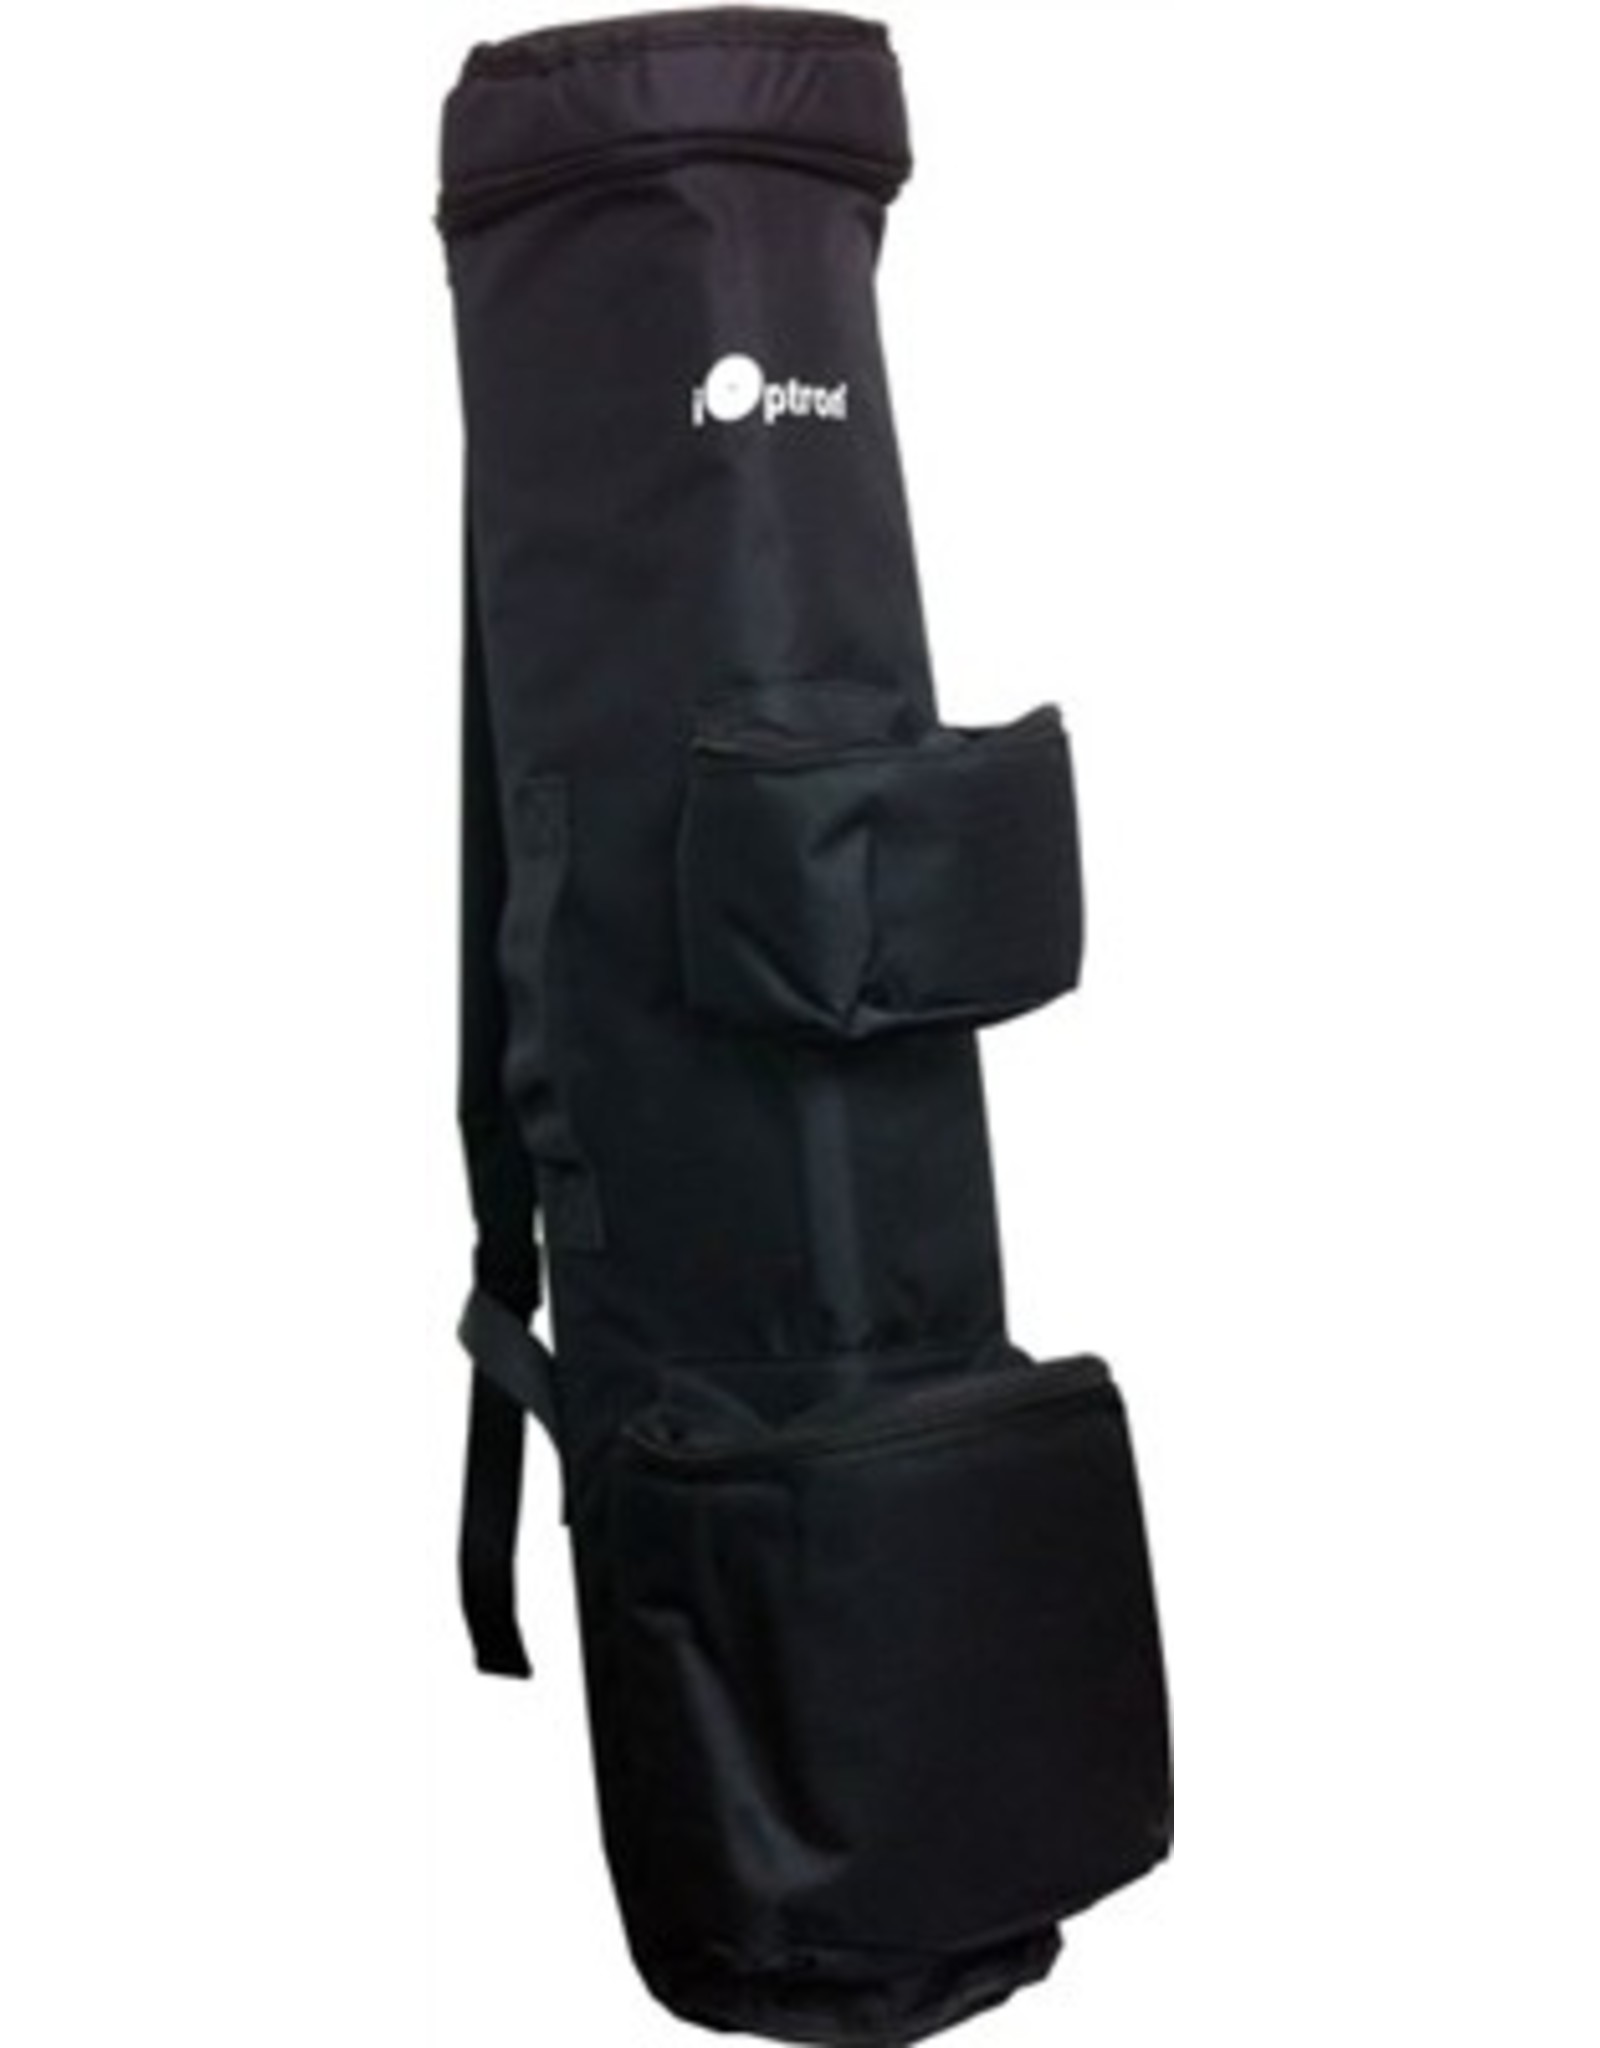 iOptron iOptron Skytracker Tripod Carry-All Bag for 1.5" tripod